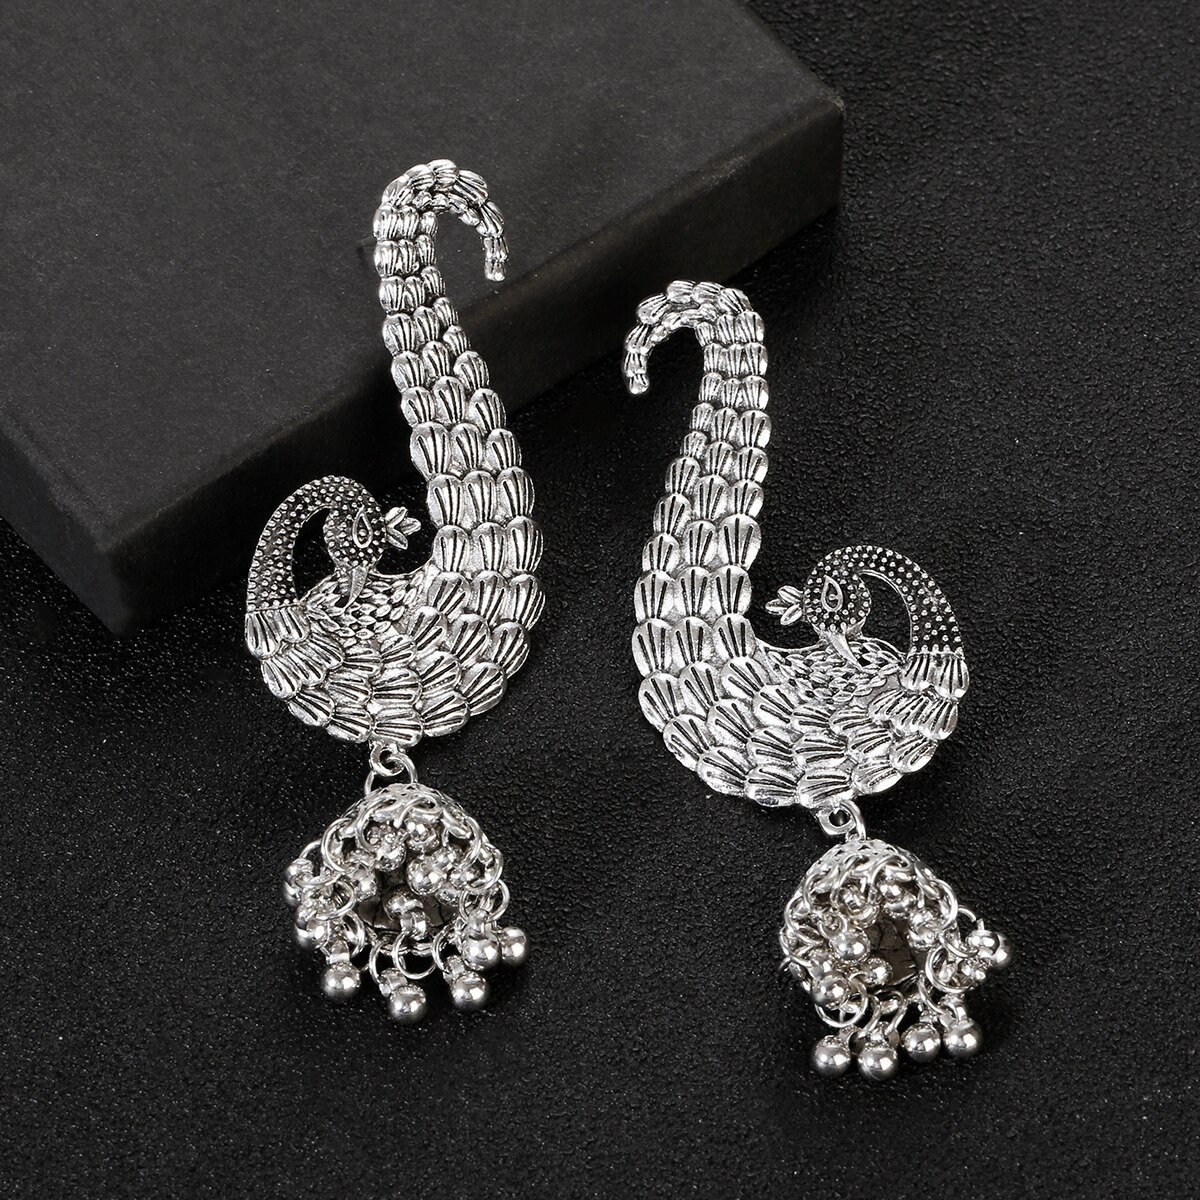 Retro-Luxury-Peacock-Indian-Earrings-For-Women-Ethnic-Gold-Color-Earrings-Piercing-Wedding-Jewelry-A-1005004007674459-2